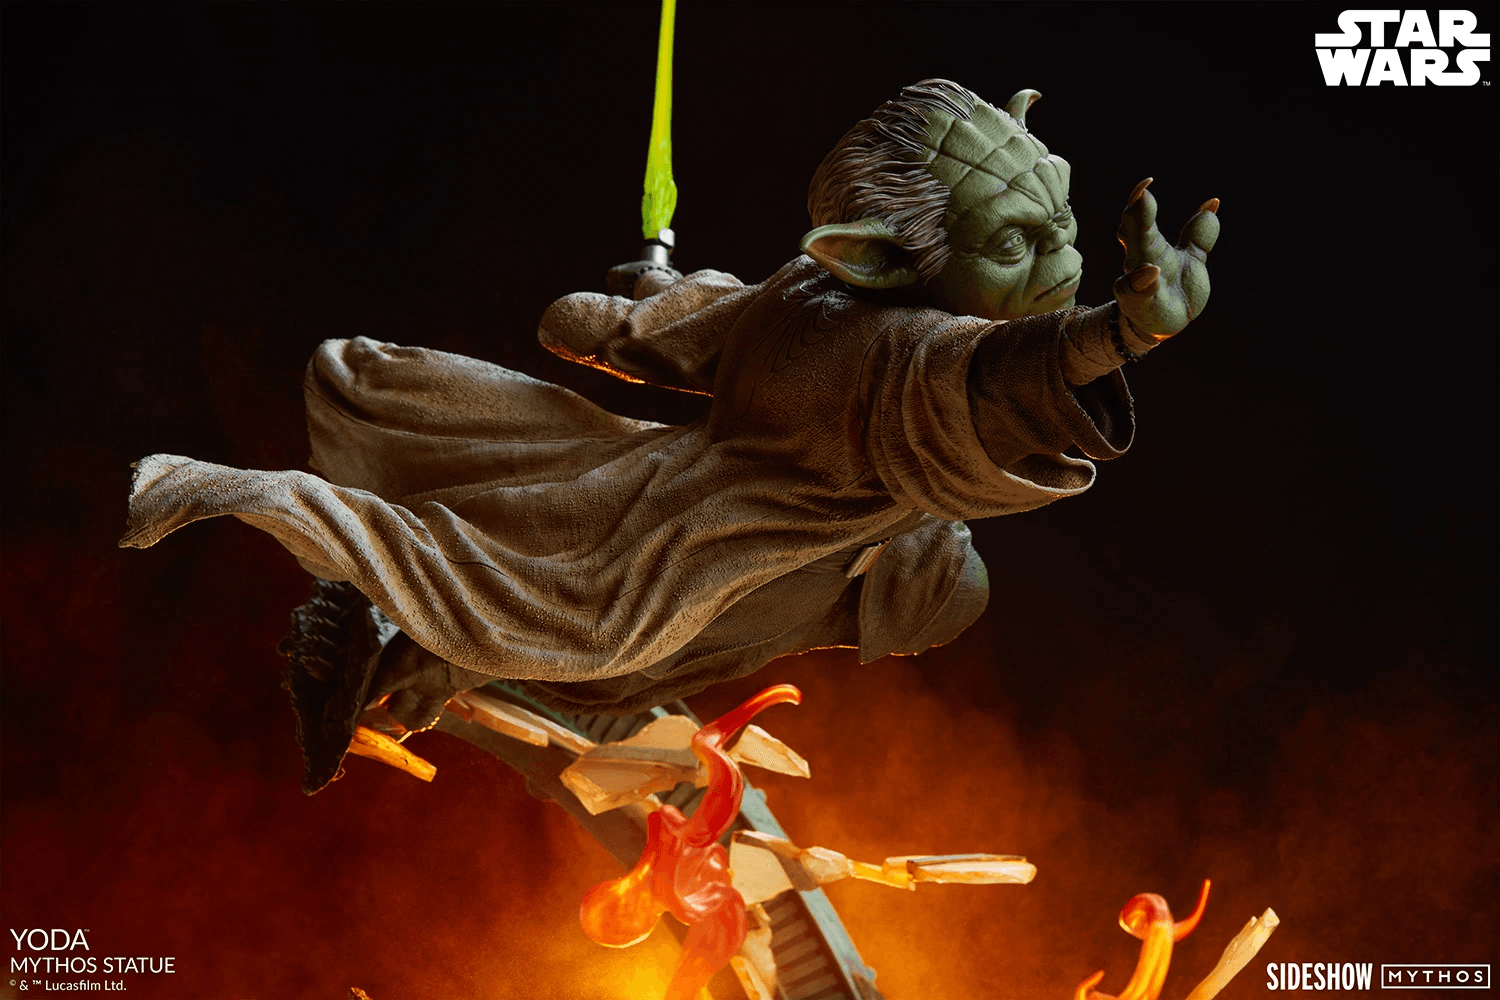 SID200647 Star Wars - Yoda Mythos Statue - Sideshow Collectibles - Titan Pop Culture